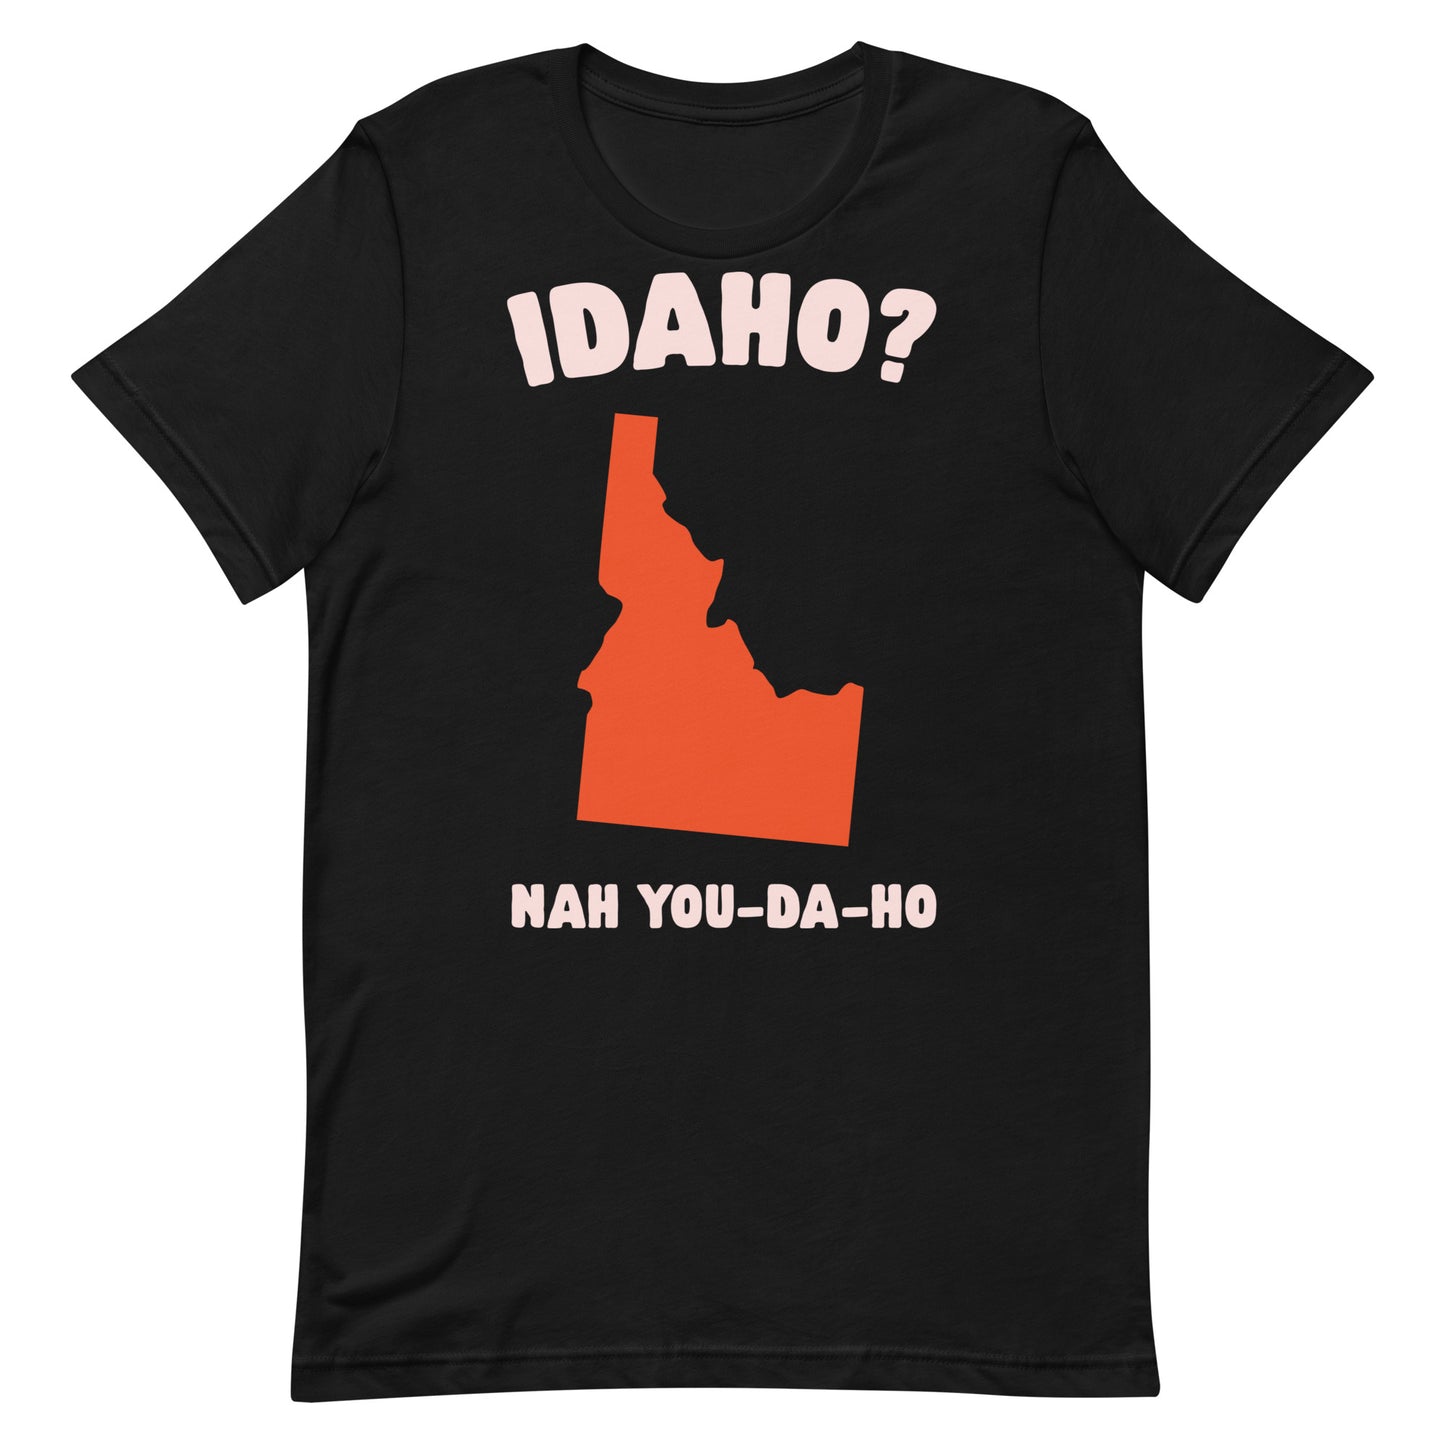 Idaho? Nah You-Da-Ho Unisex t-shirt